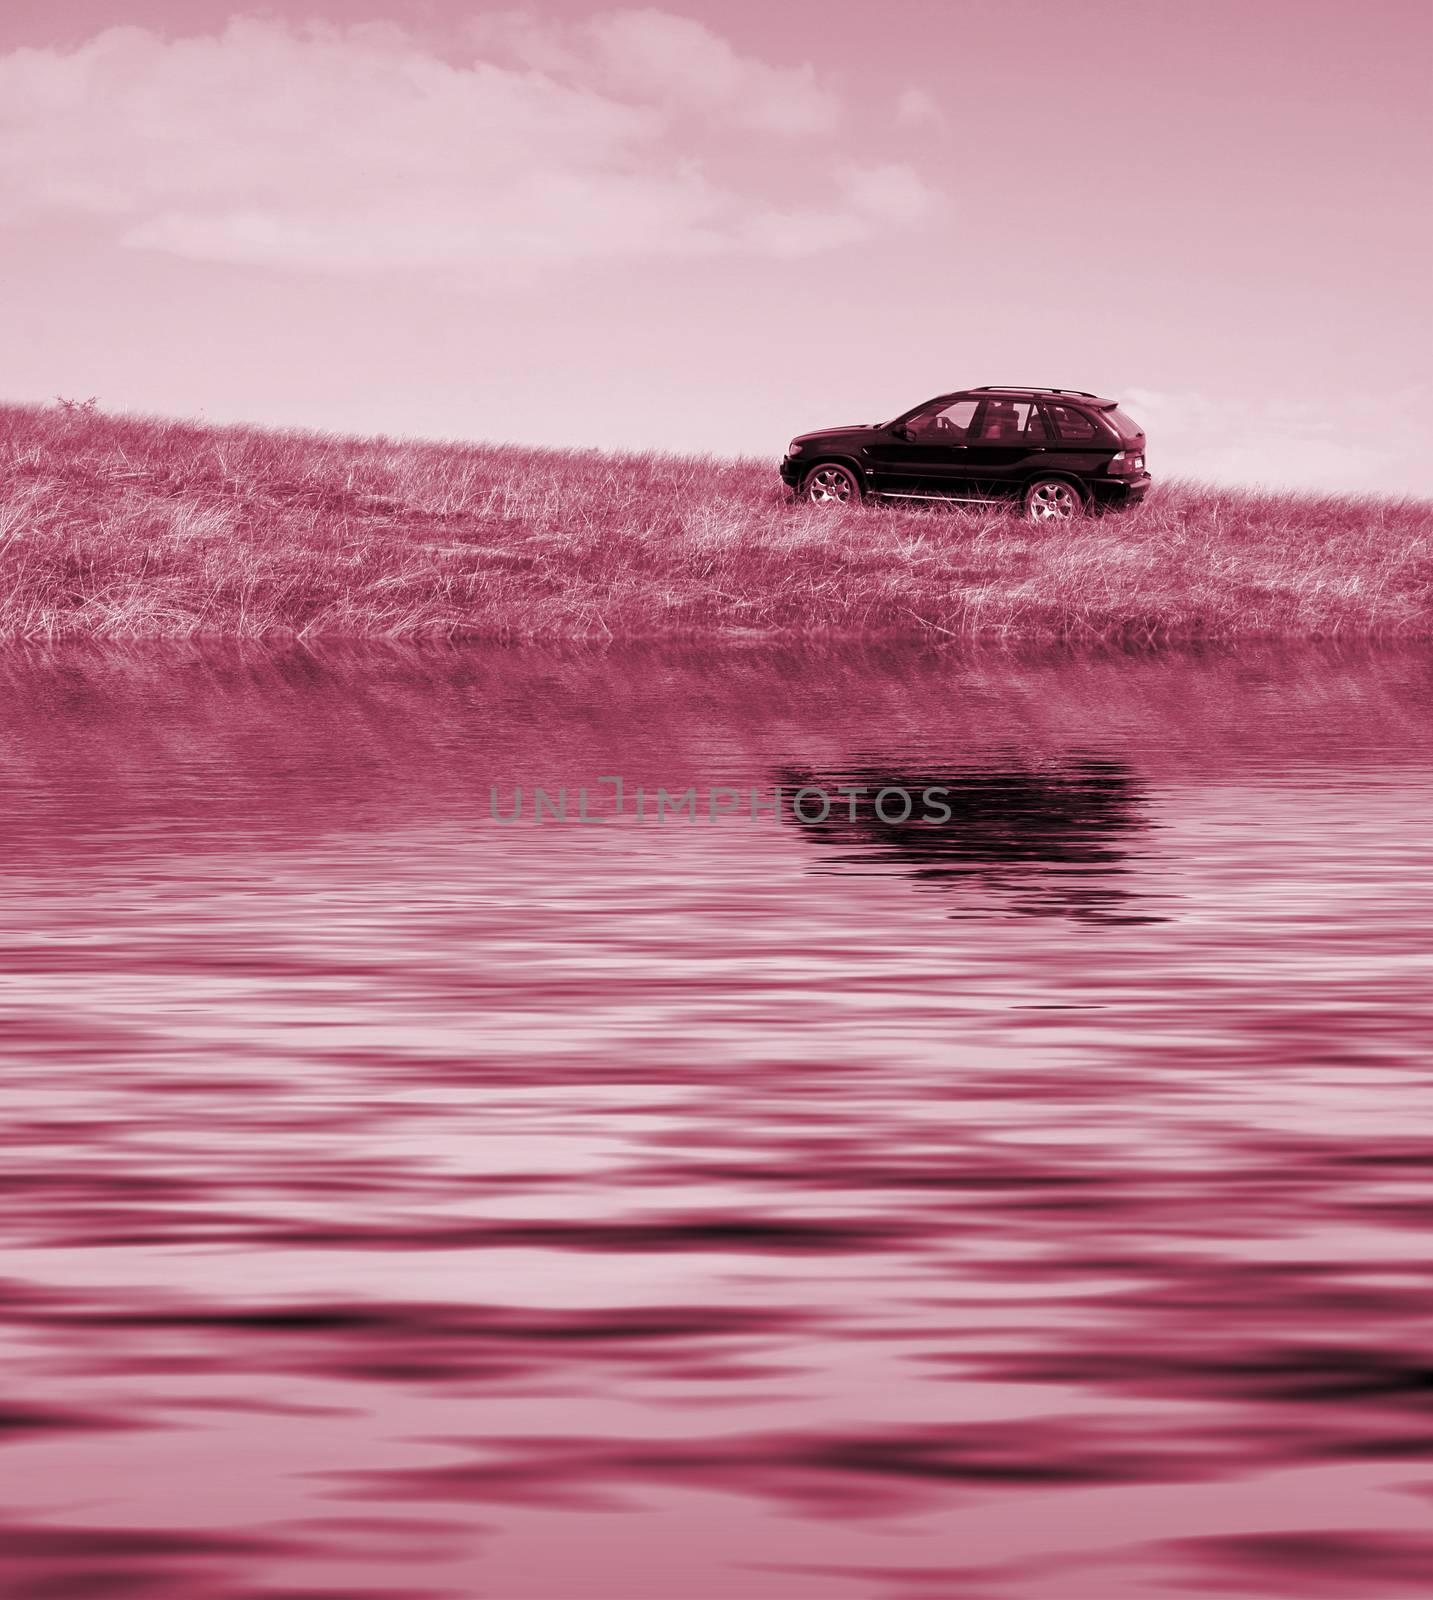 Car on the meadow near a lake.